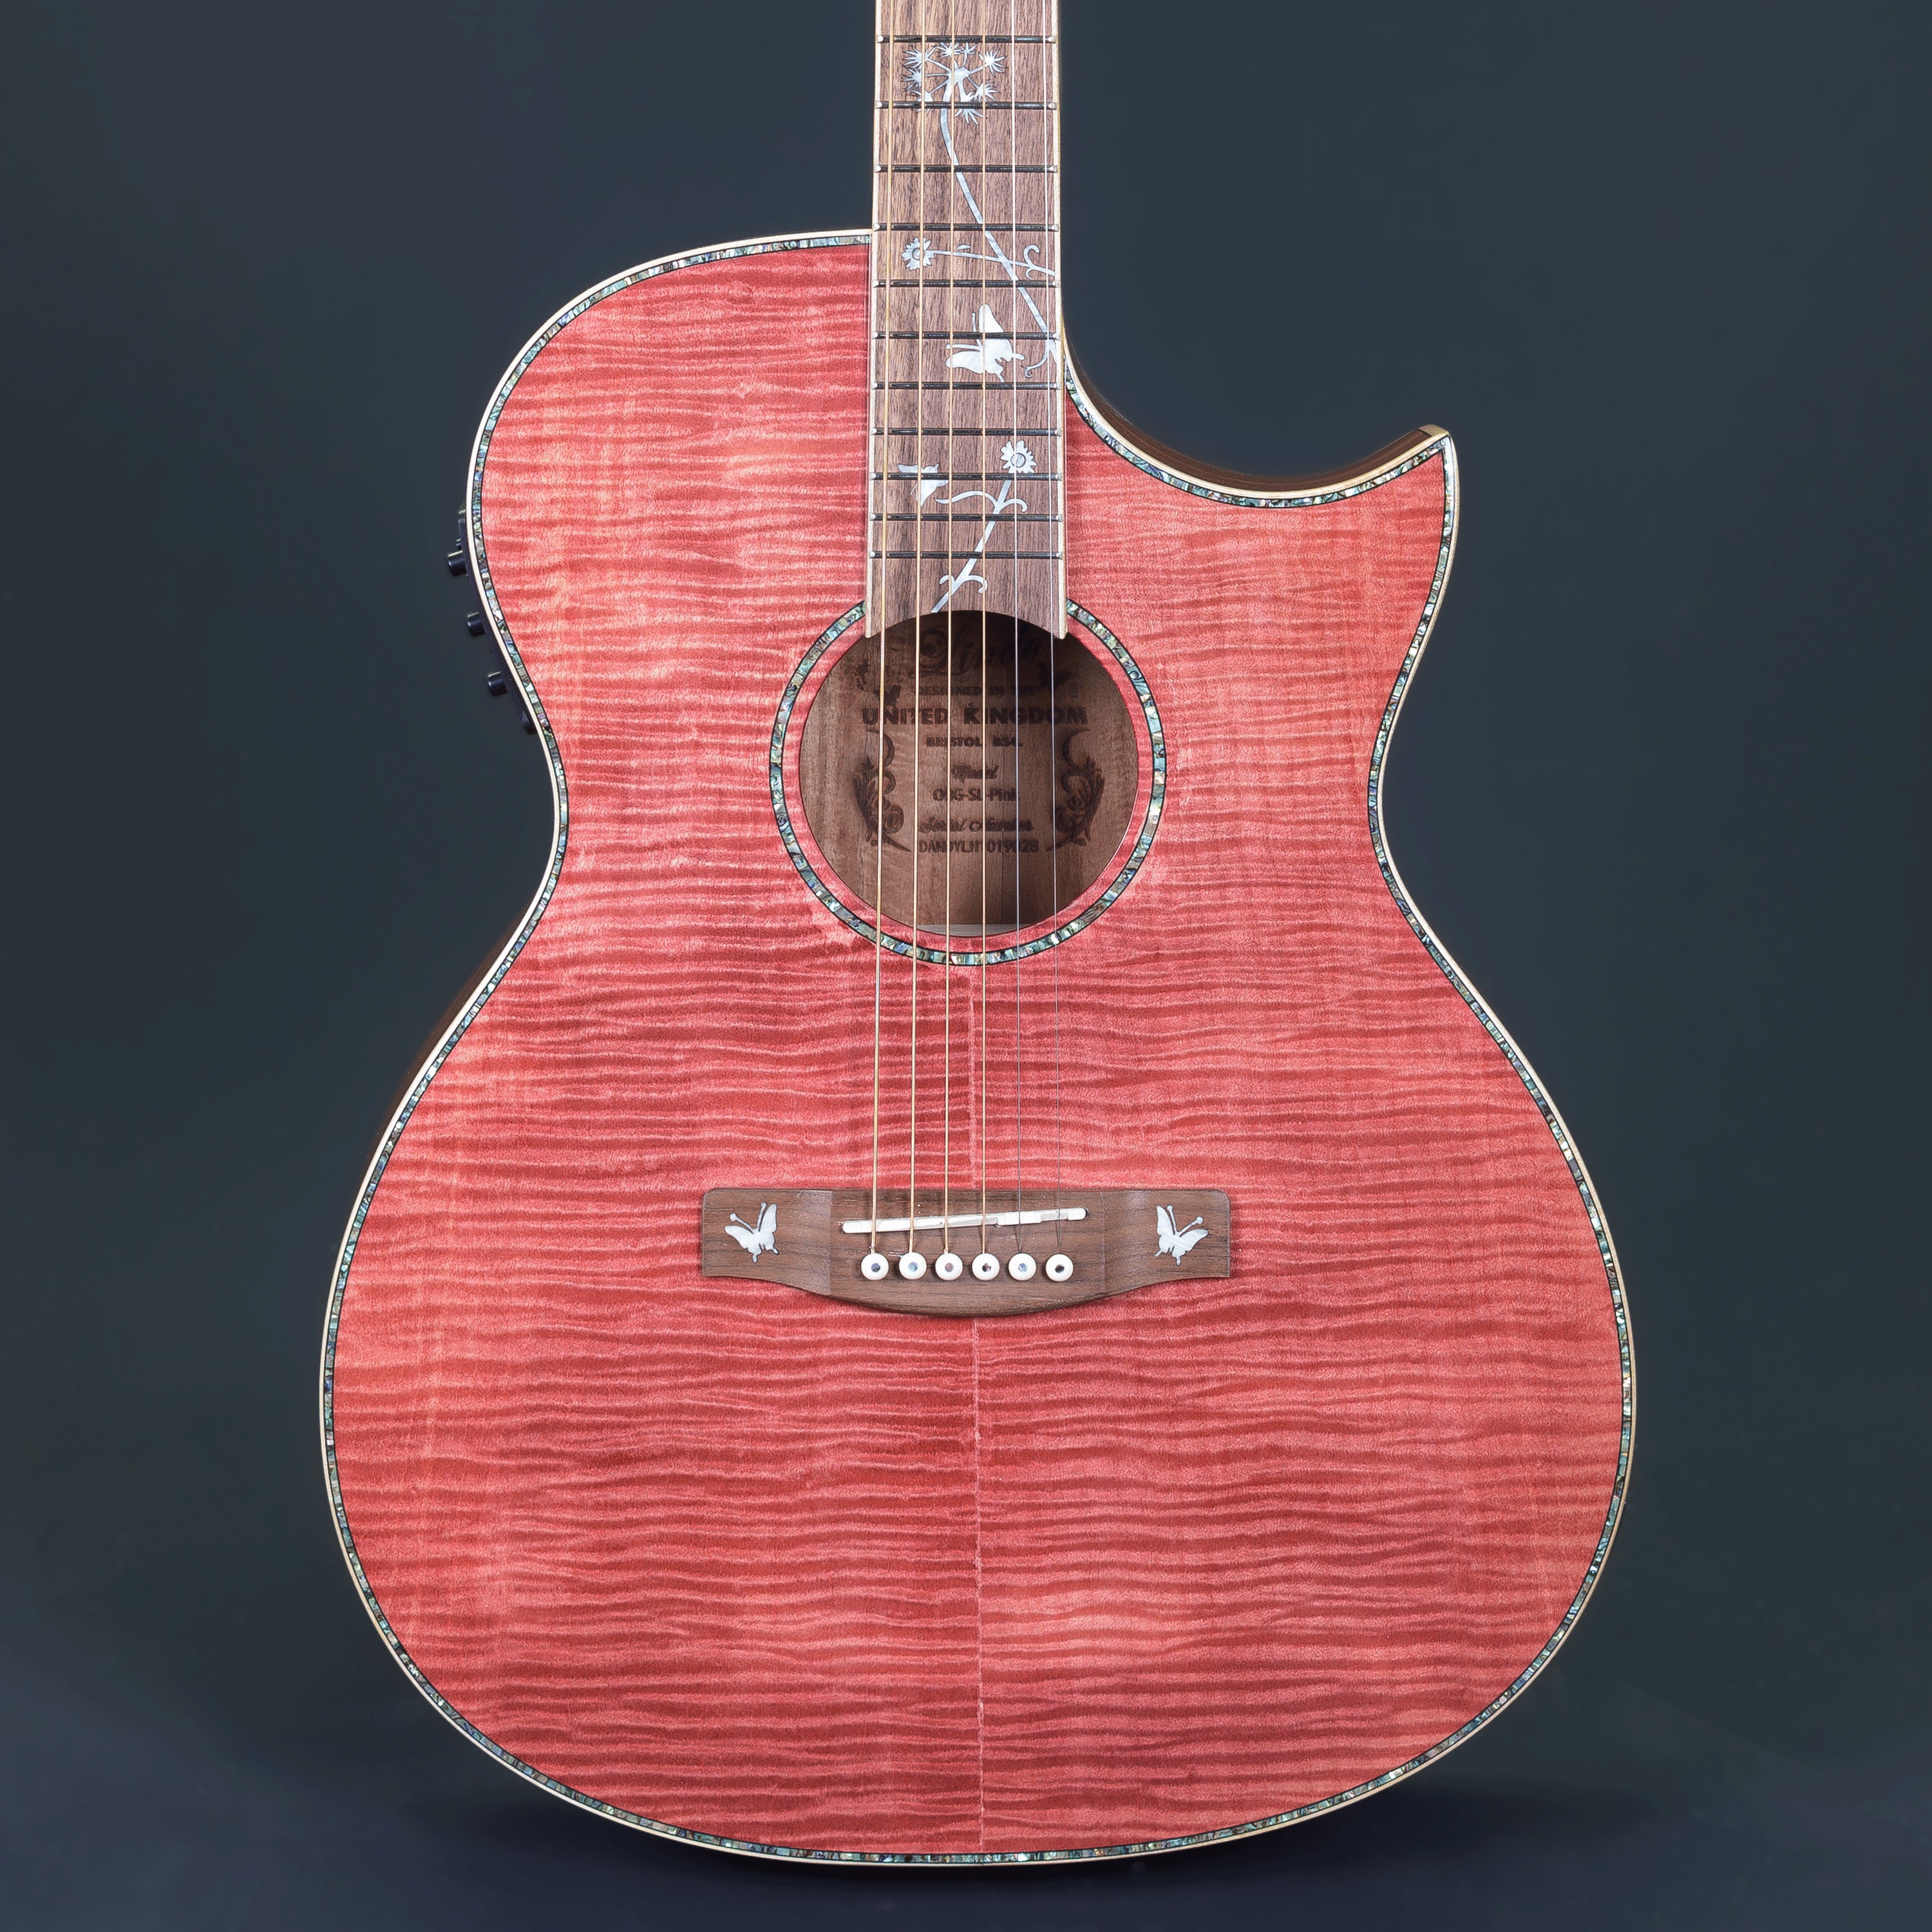 Lindo Dandelion Pink Slim Body Electro-acoustic Guitar With